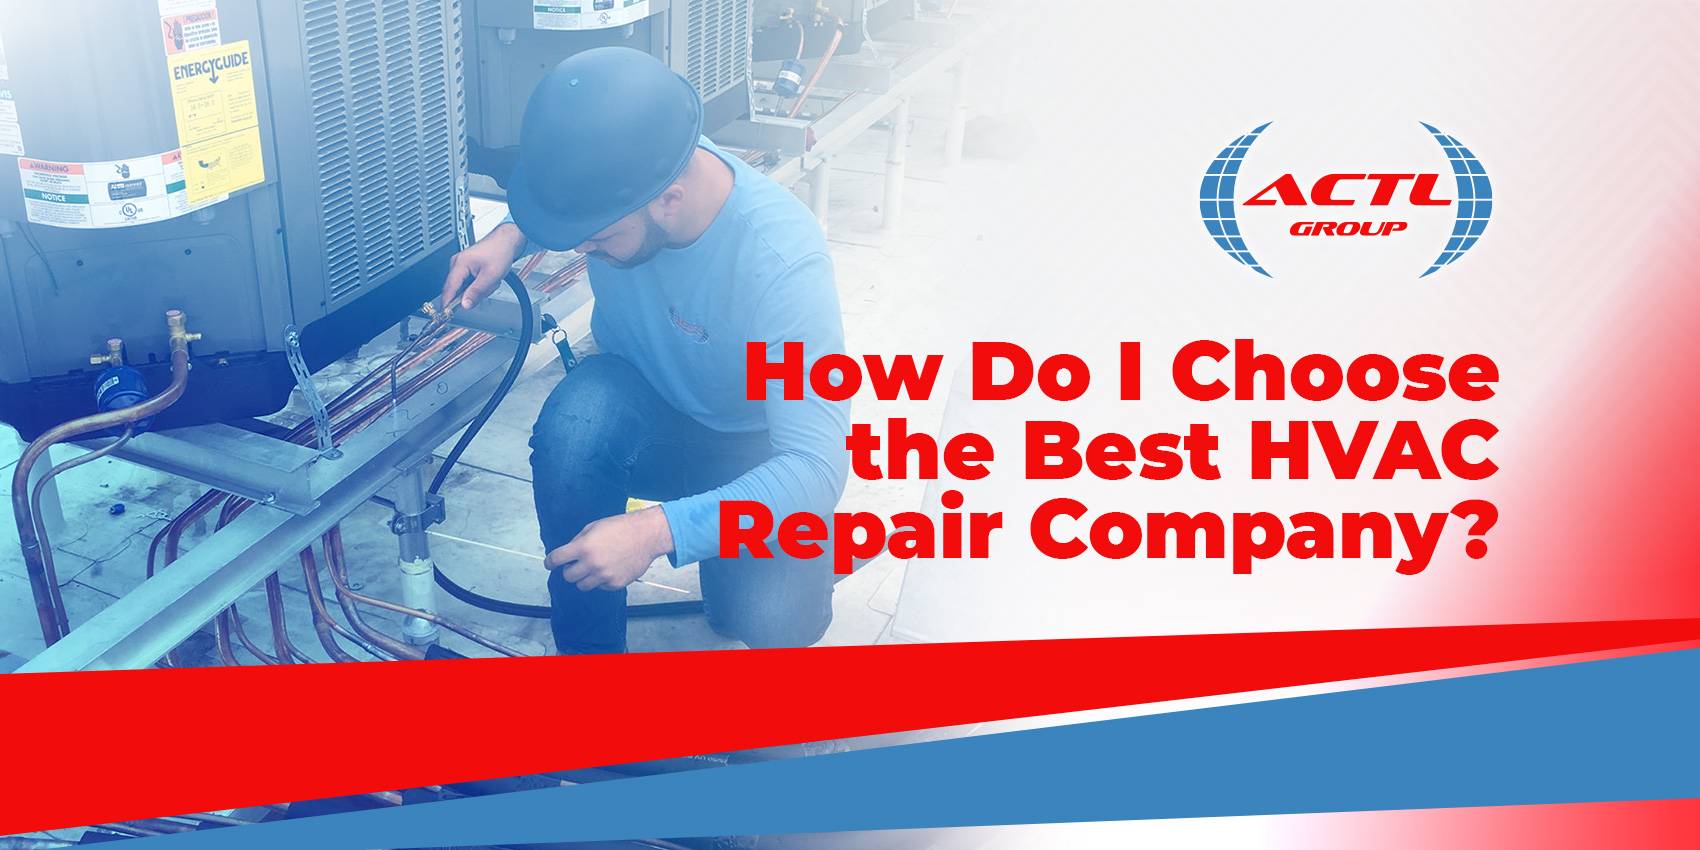 How Do I Choose the Best HVAC Repair Company?